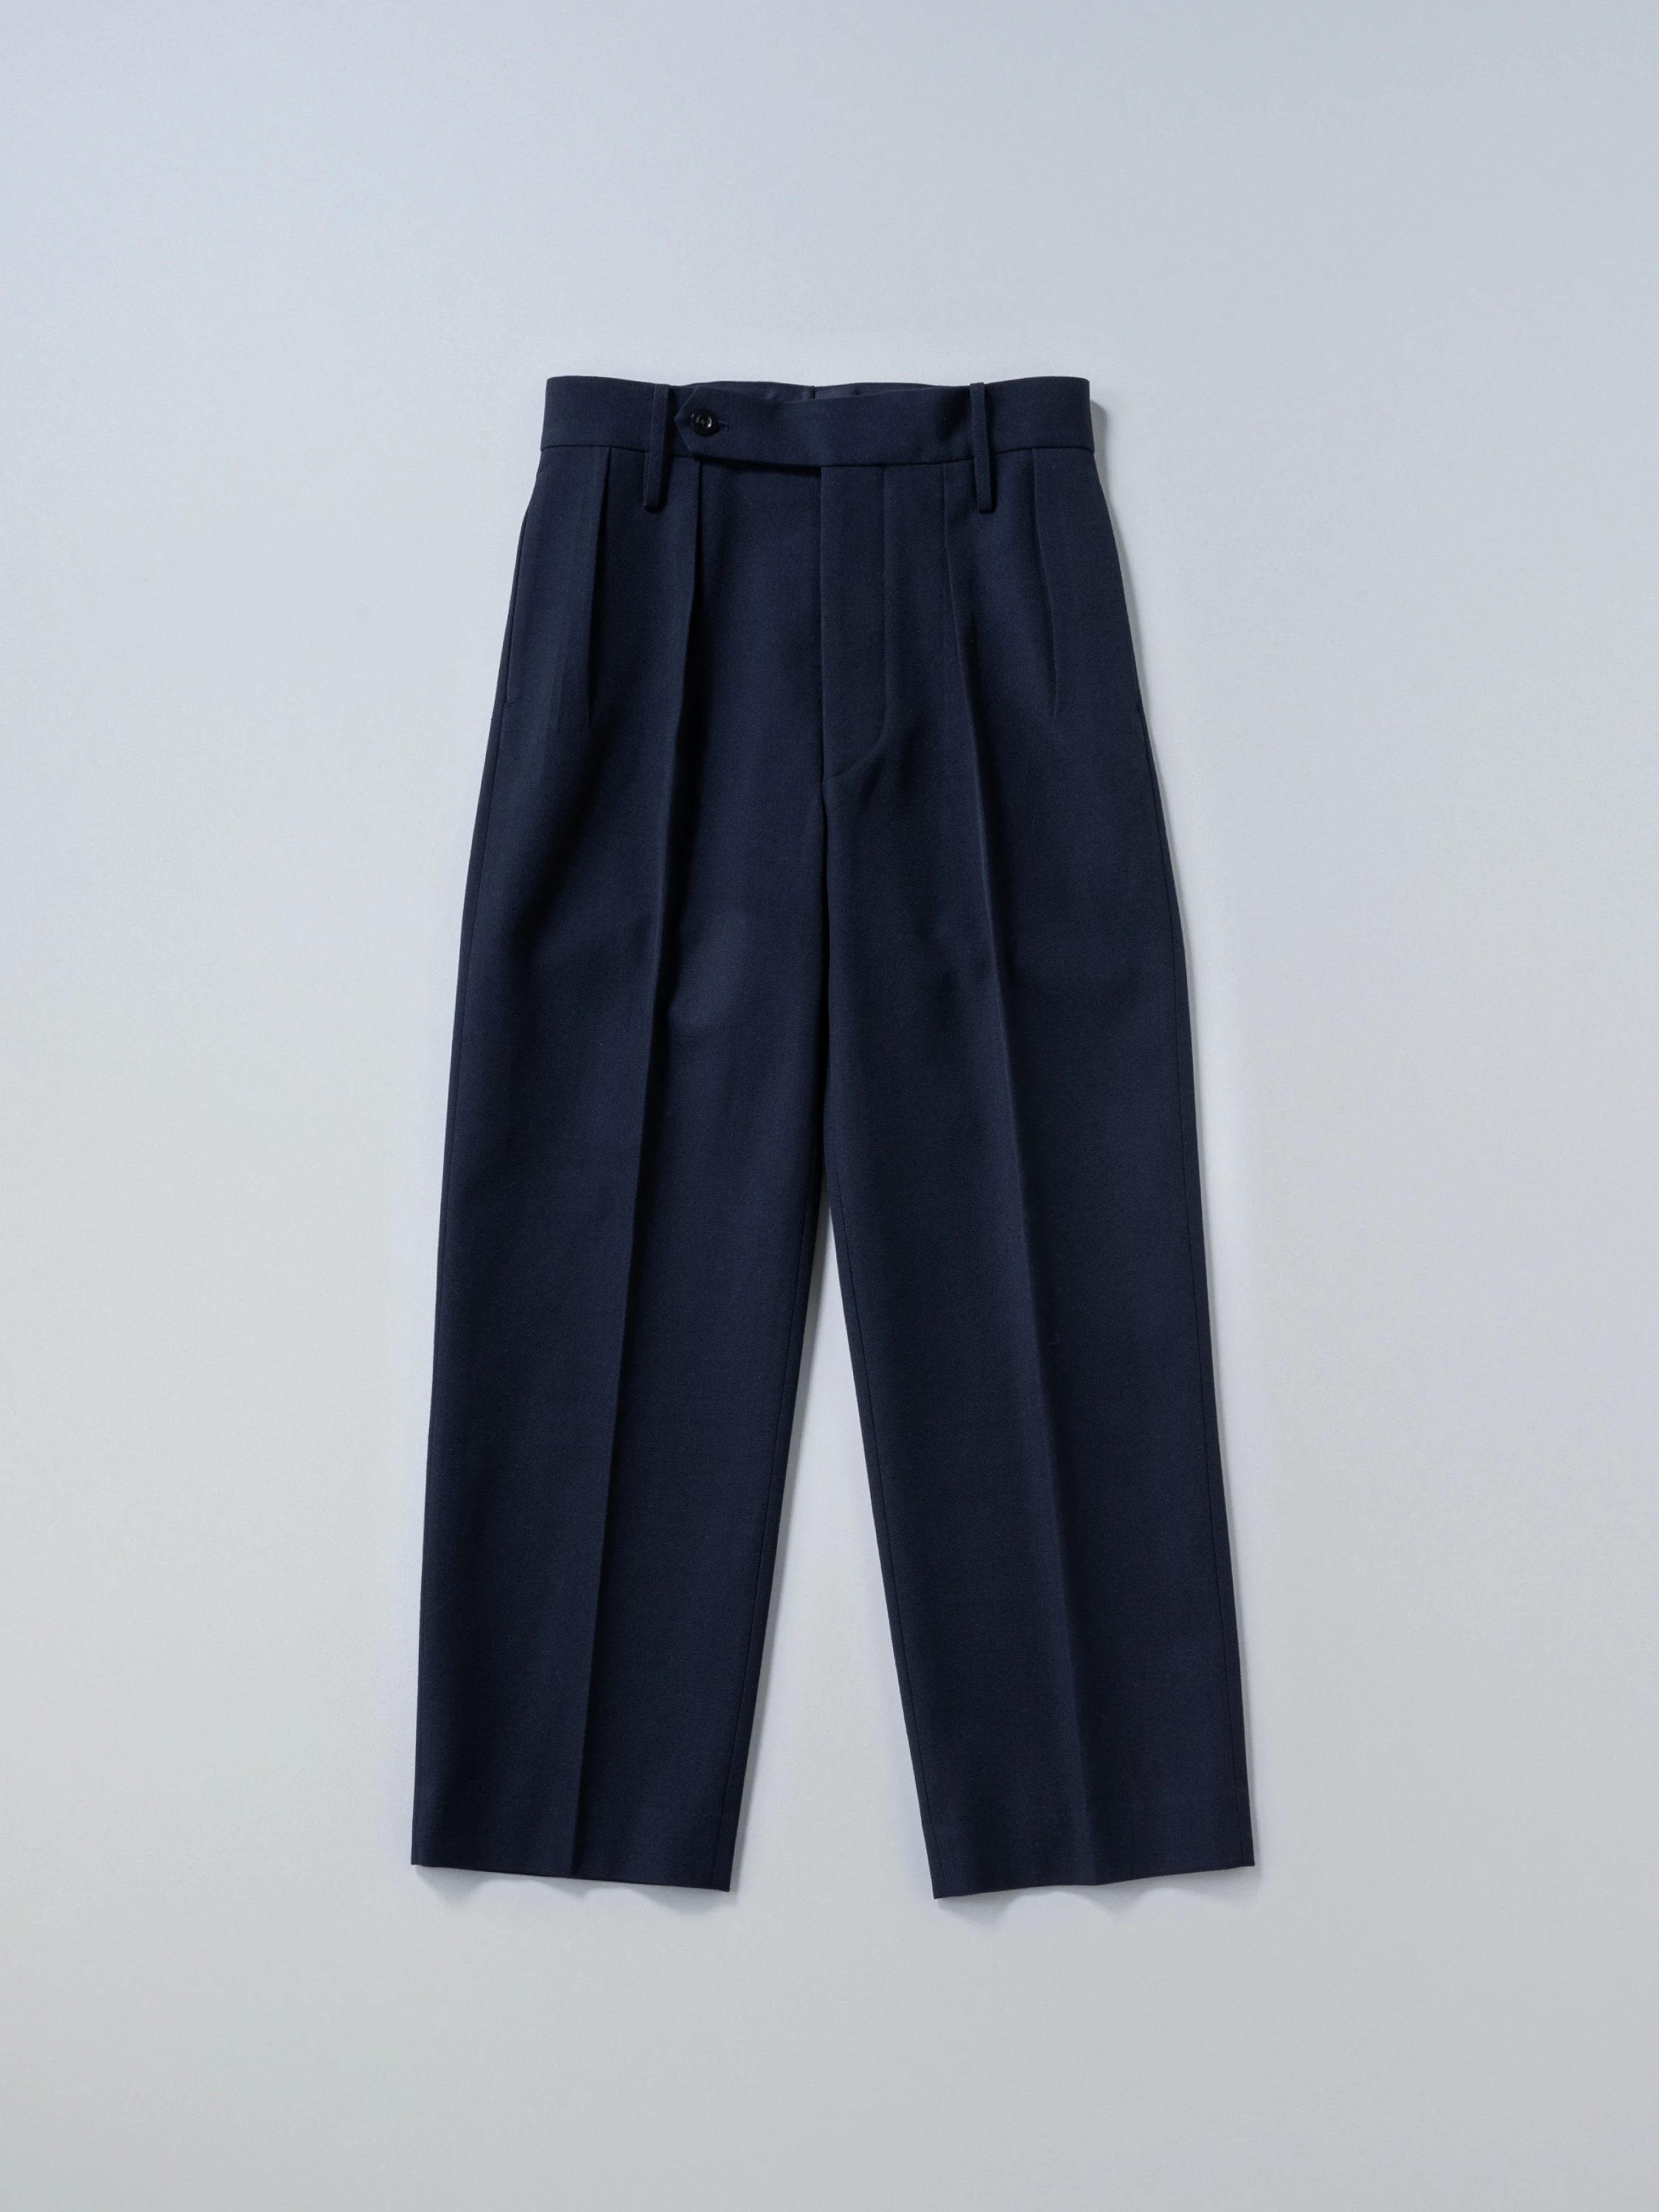 2Pleats Trousers | BOTTOMS | KAPTAIN SUNSHINE ONLINE STORE